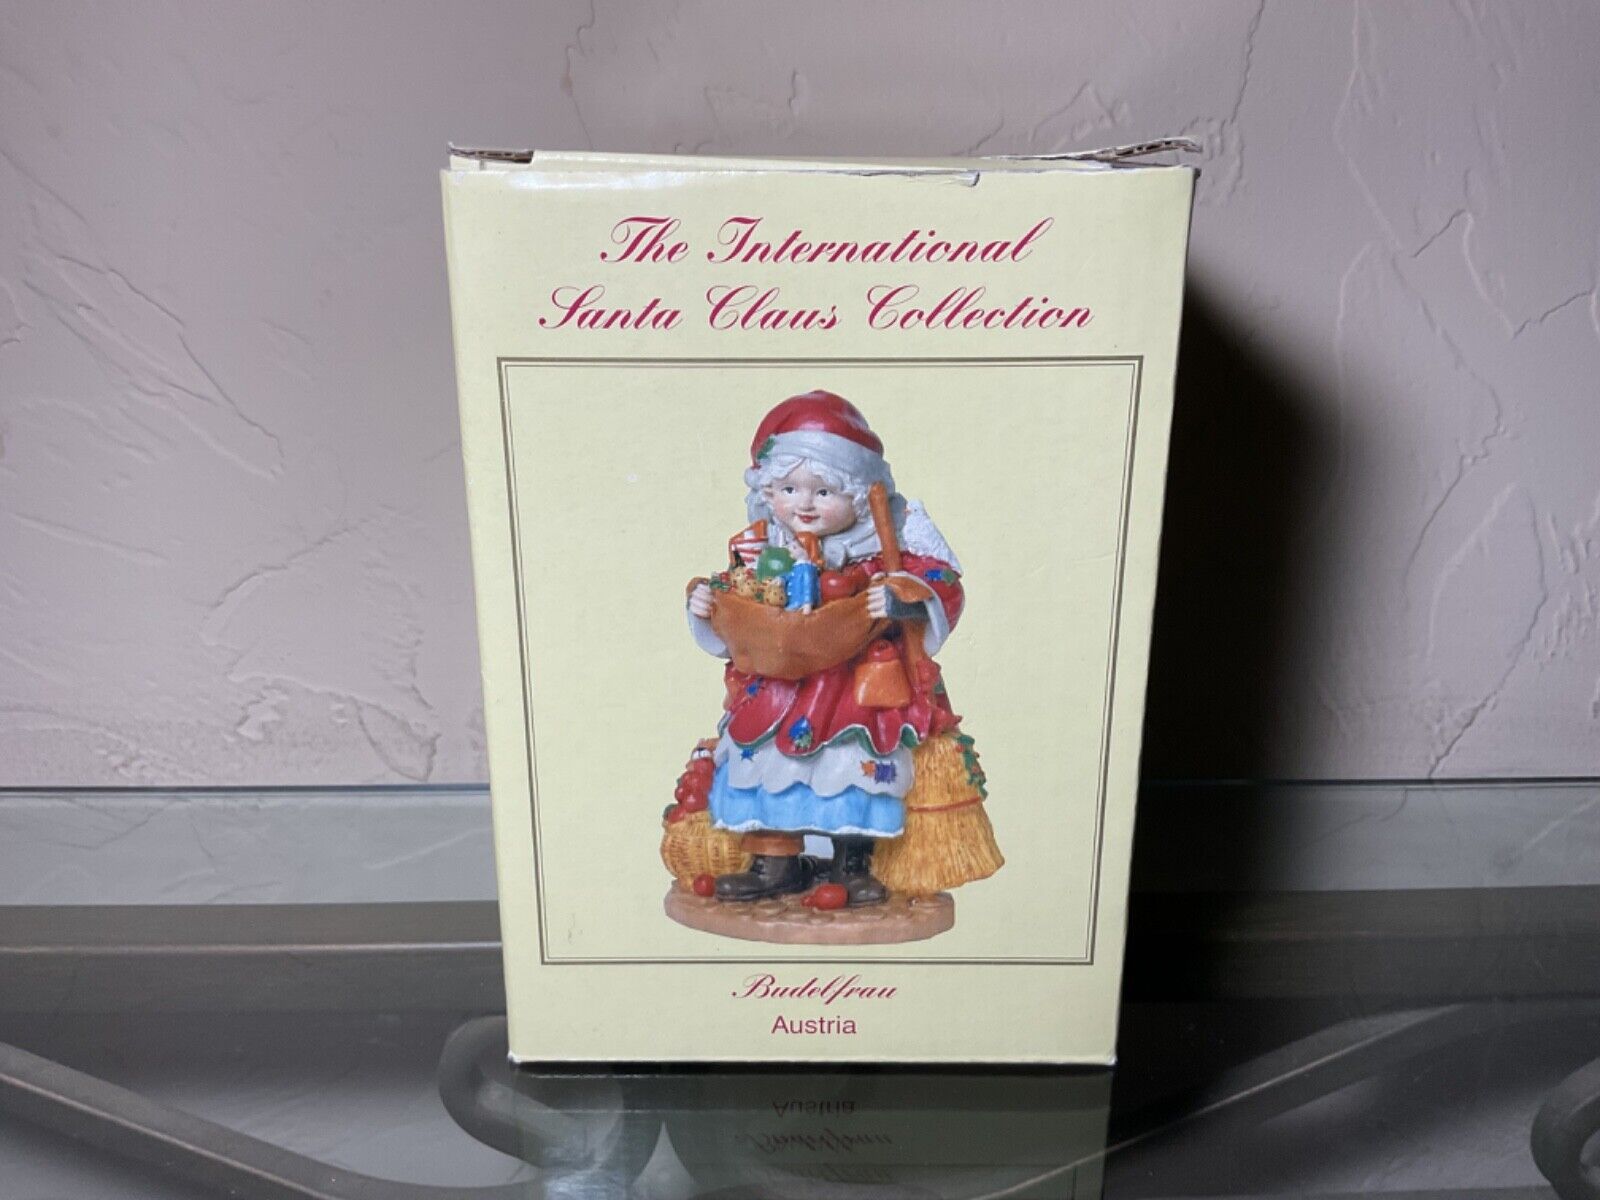 The International Santa Claus Collection “Budelfrau” Austria 2002